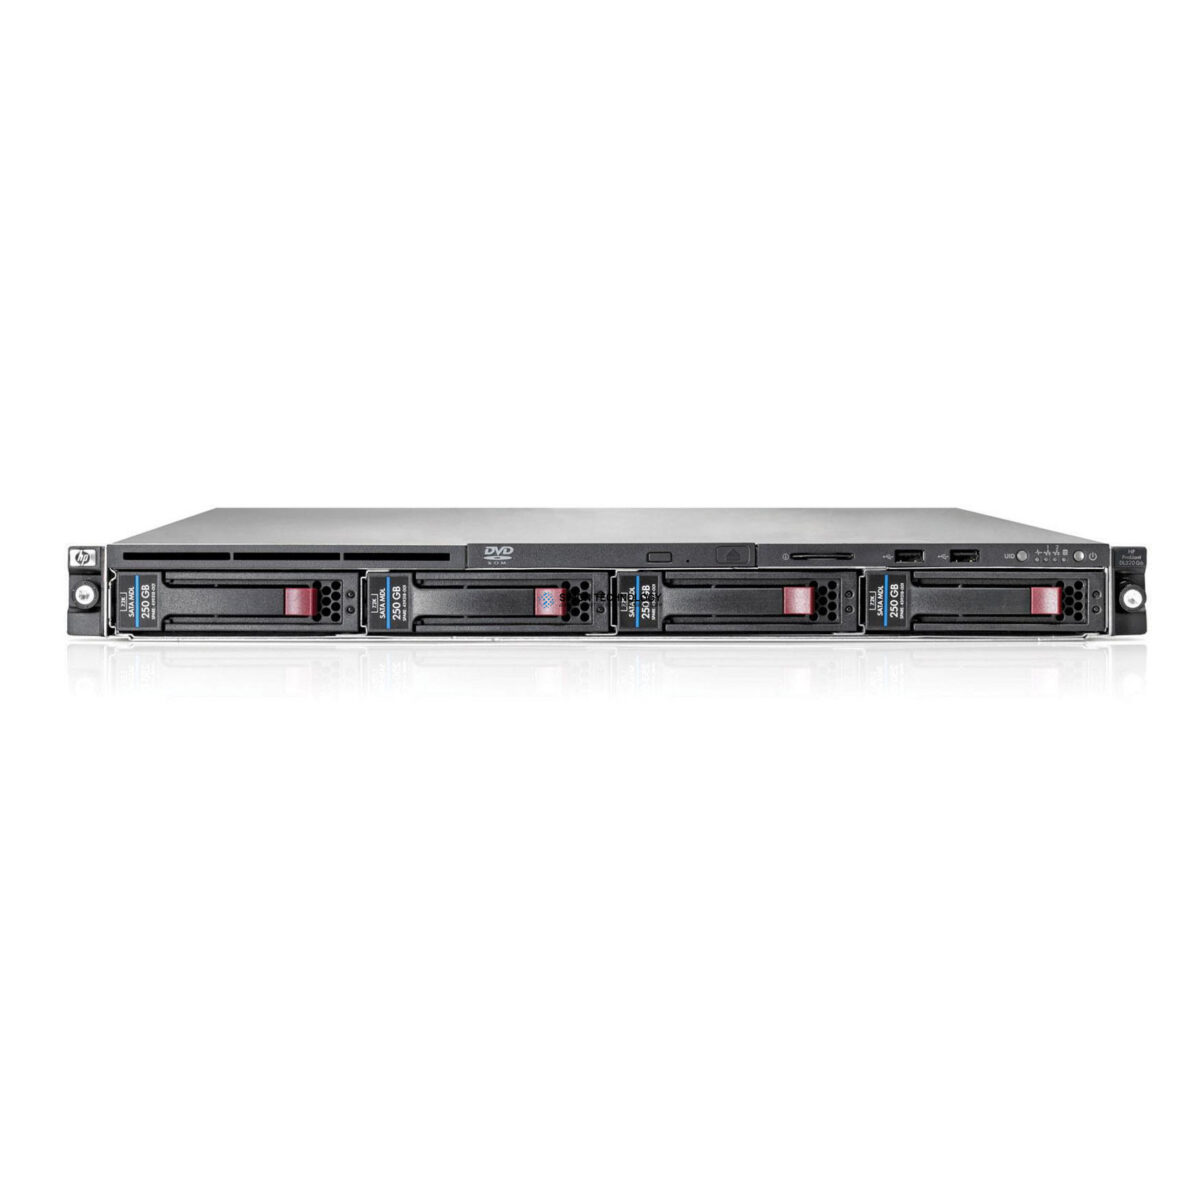 Сервер HP DL320 G6 L5506 1P 4GB-U B110I SATA LFF 500W PS HE SVR (505683-421)